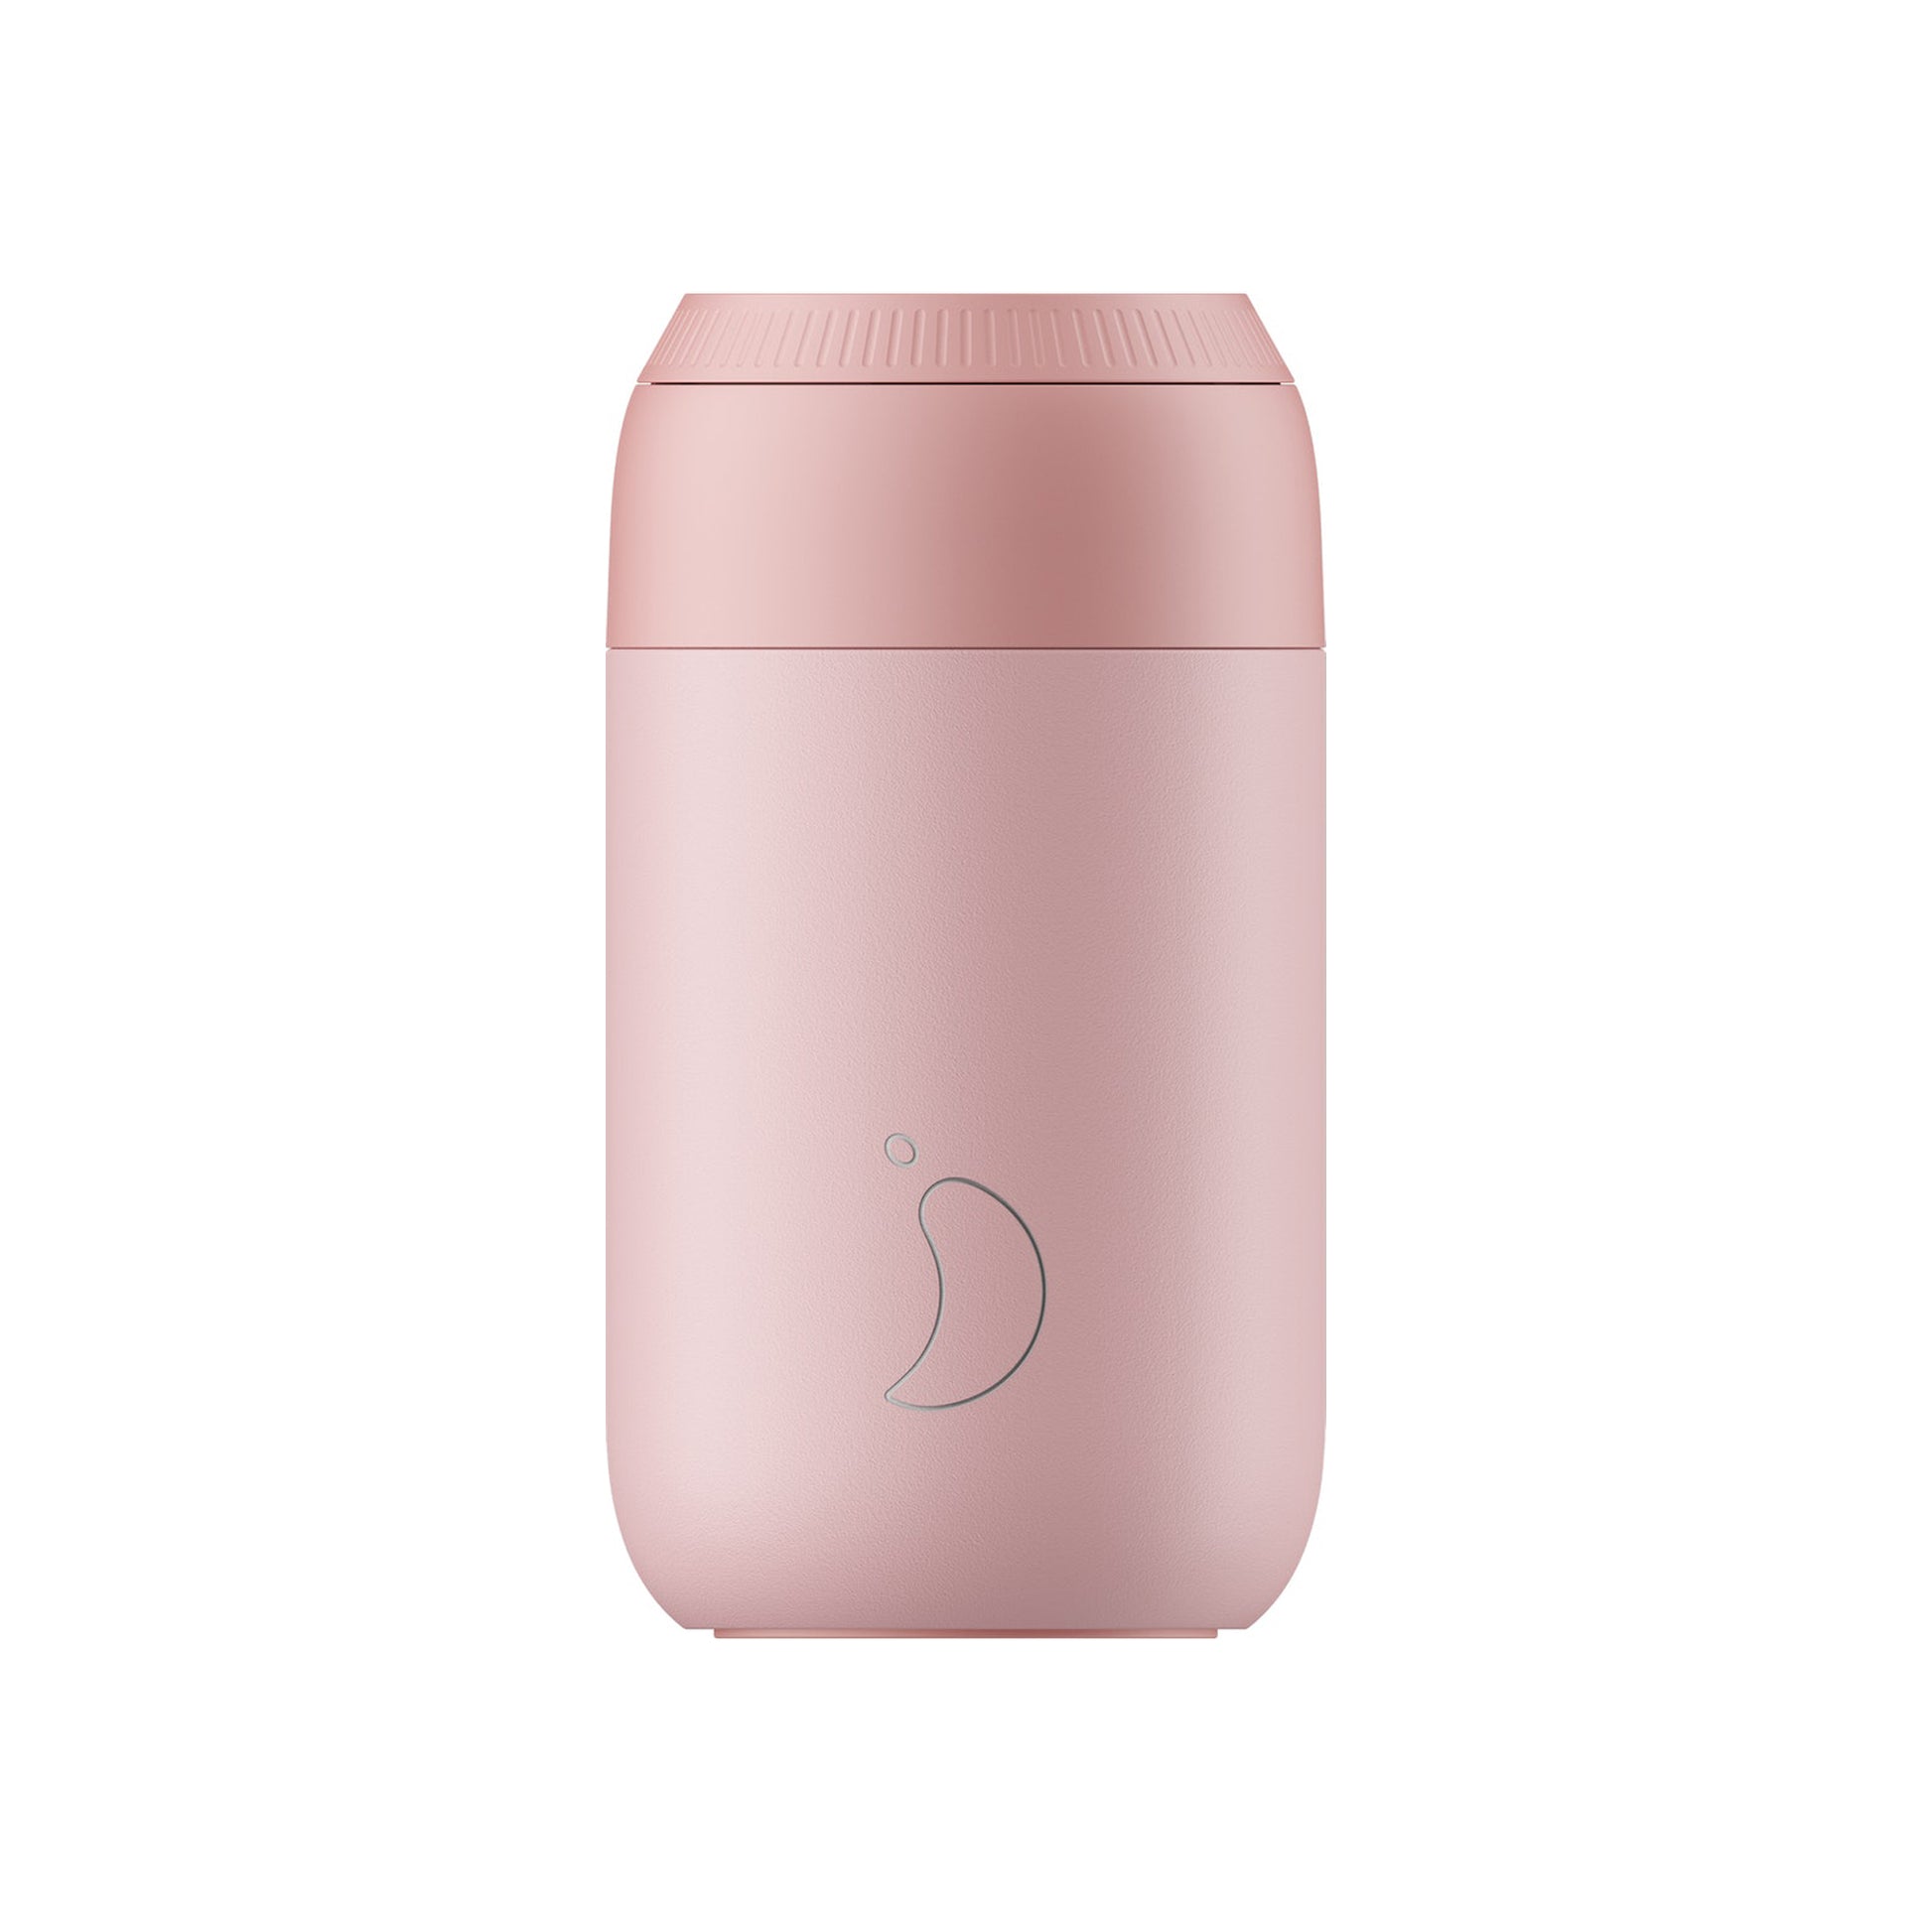 a light pink travel mug with a leak proof rotating lid